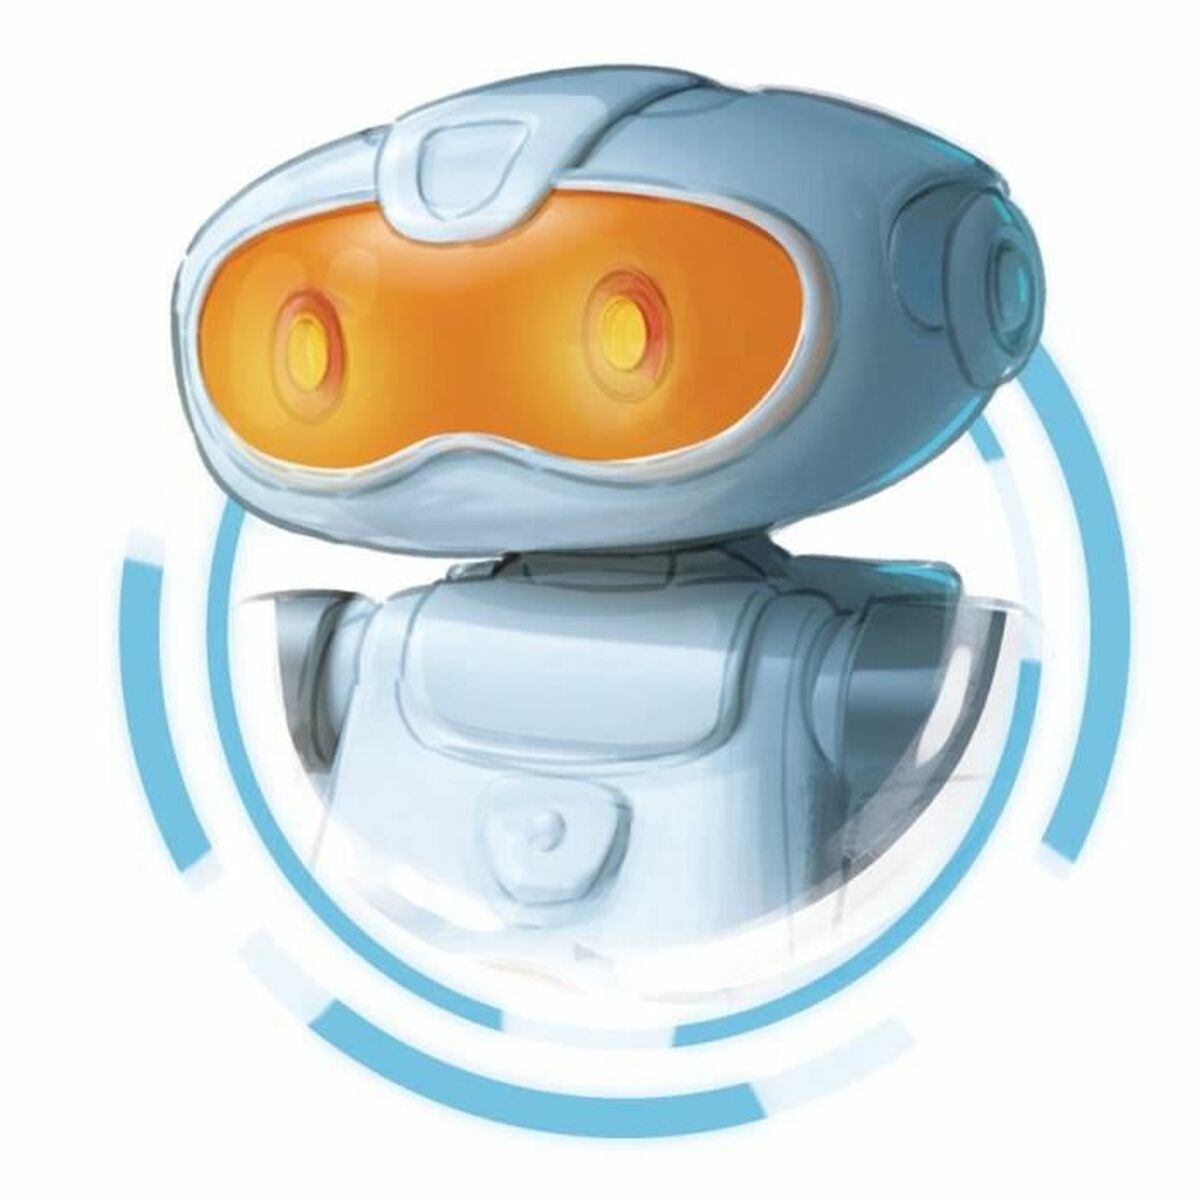 Robot interattivo Clementoni 52434